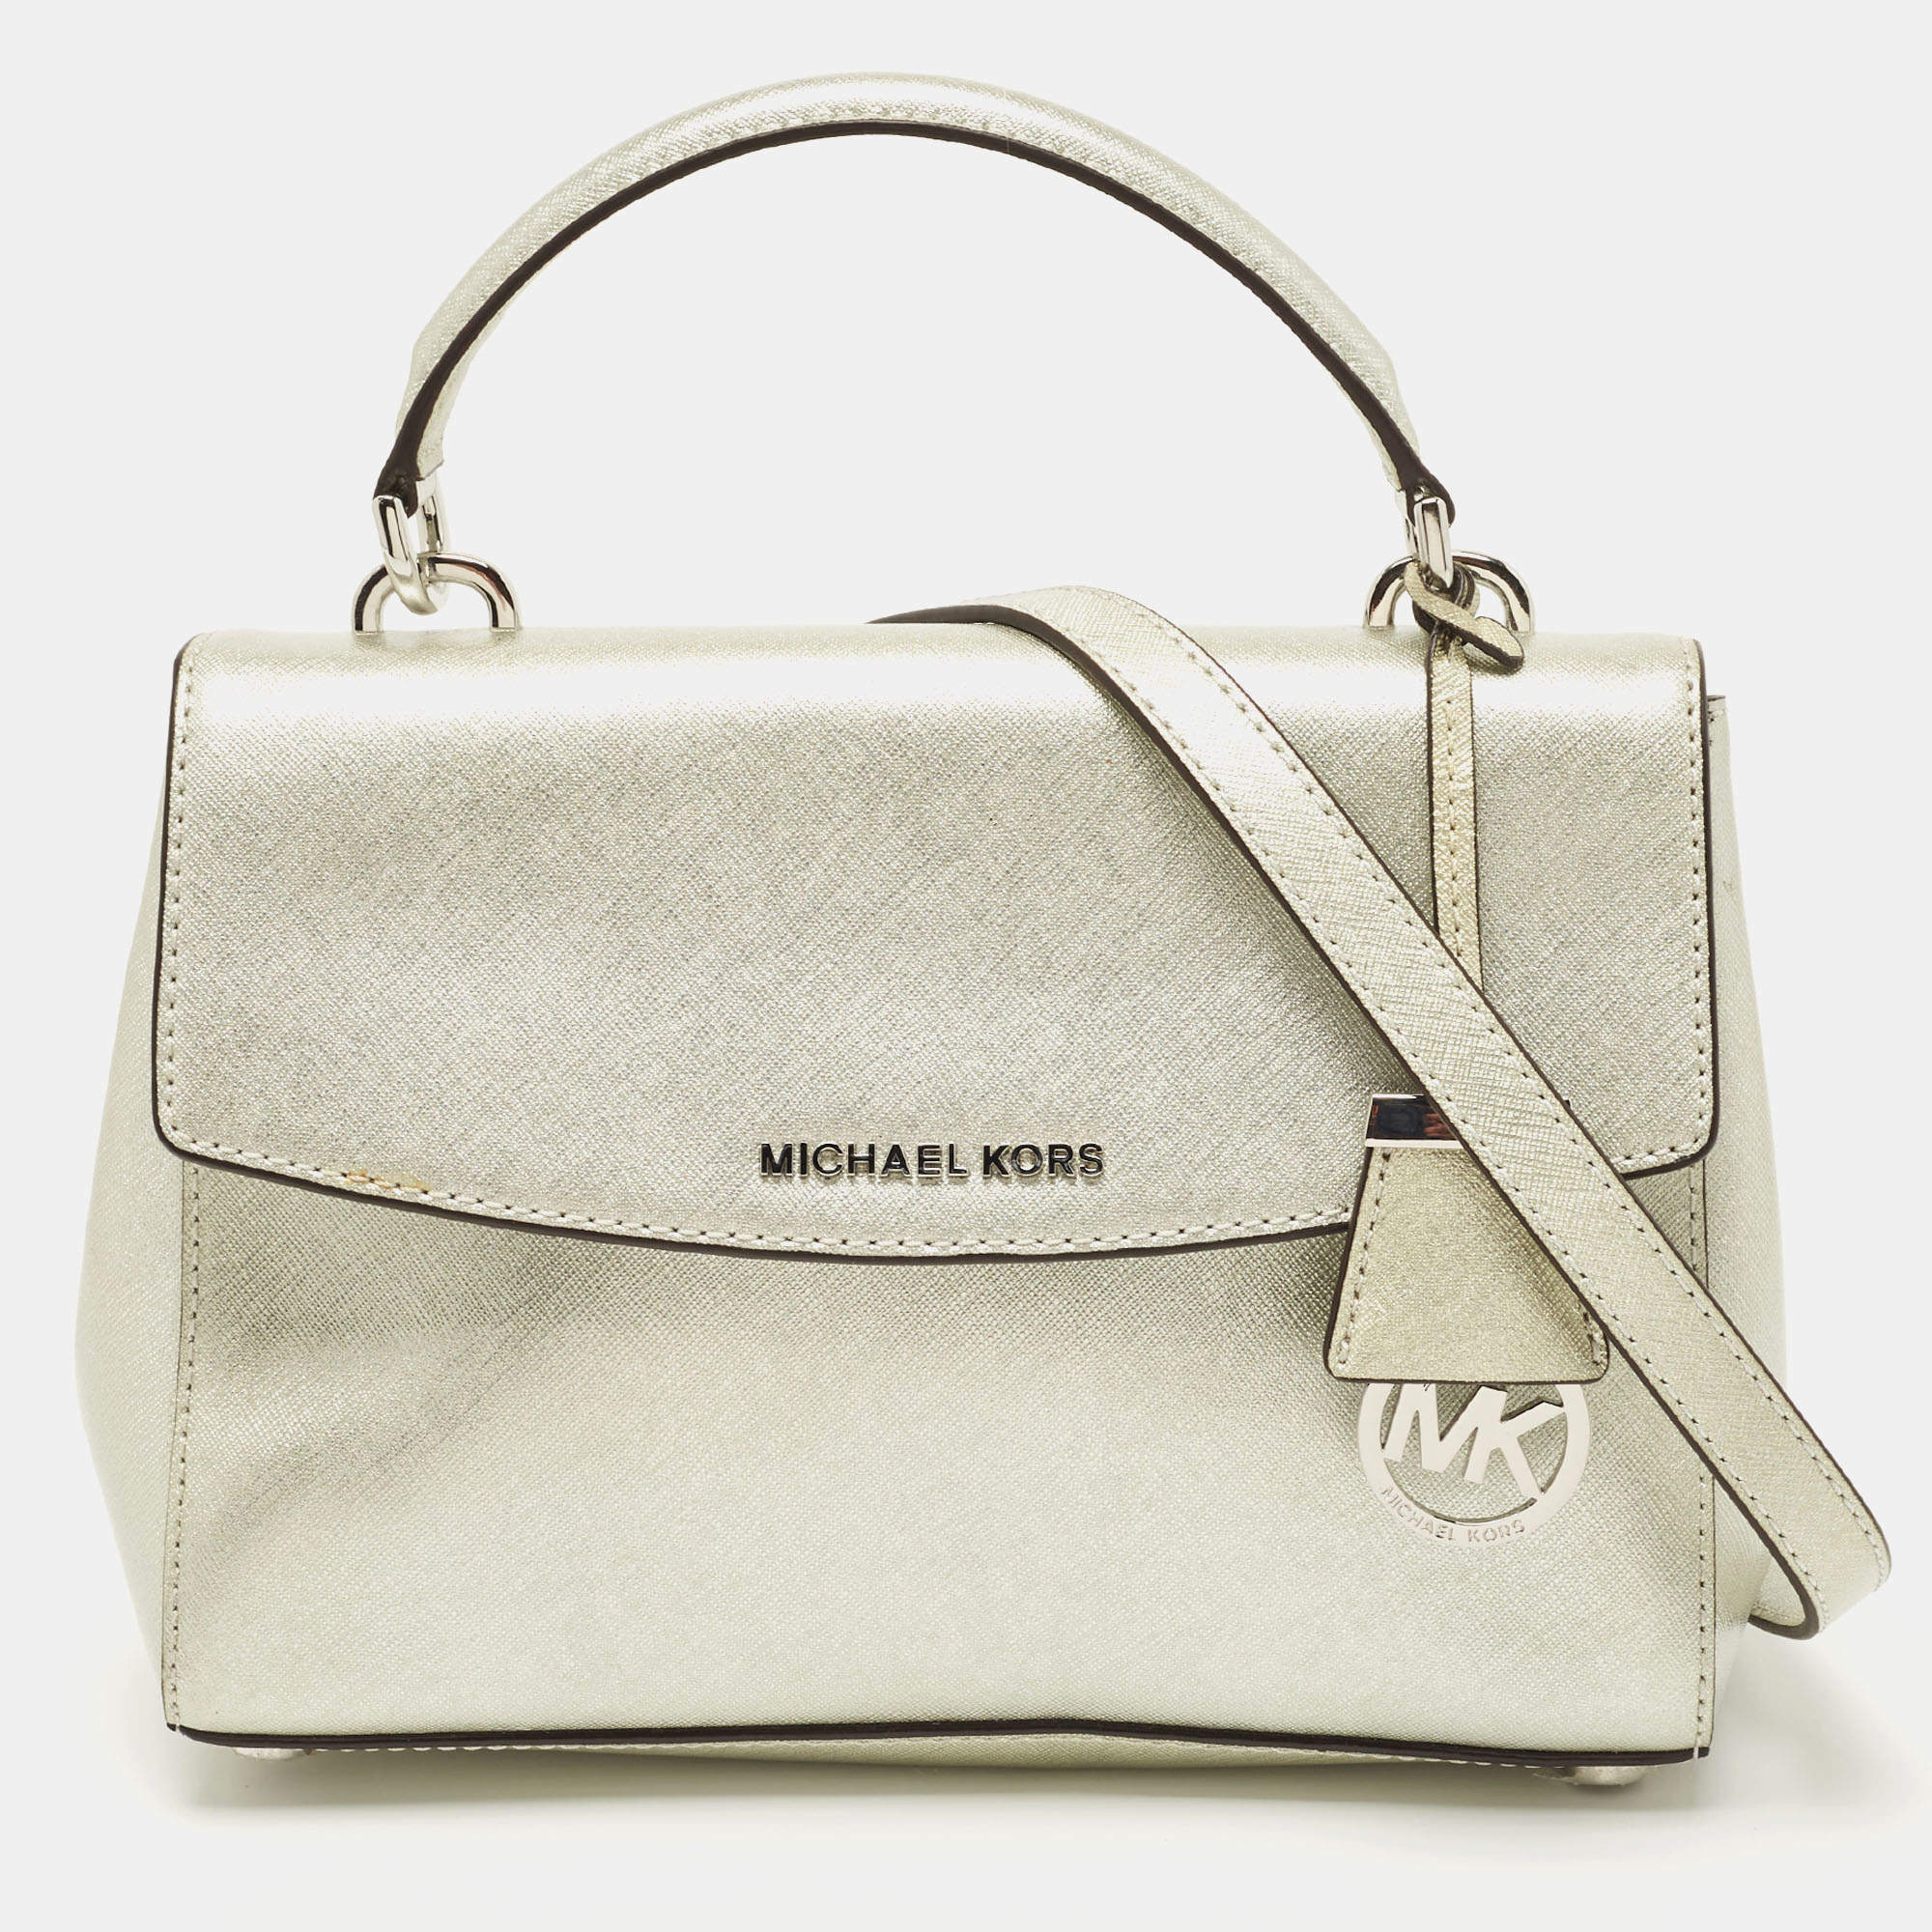 Michael Michael Kors Ava Small Metallic Leather Satchel Bag, Silver